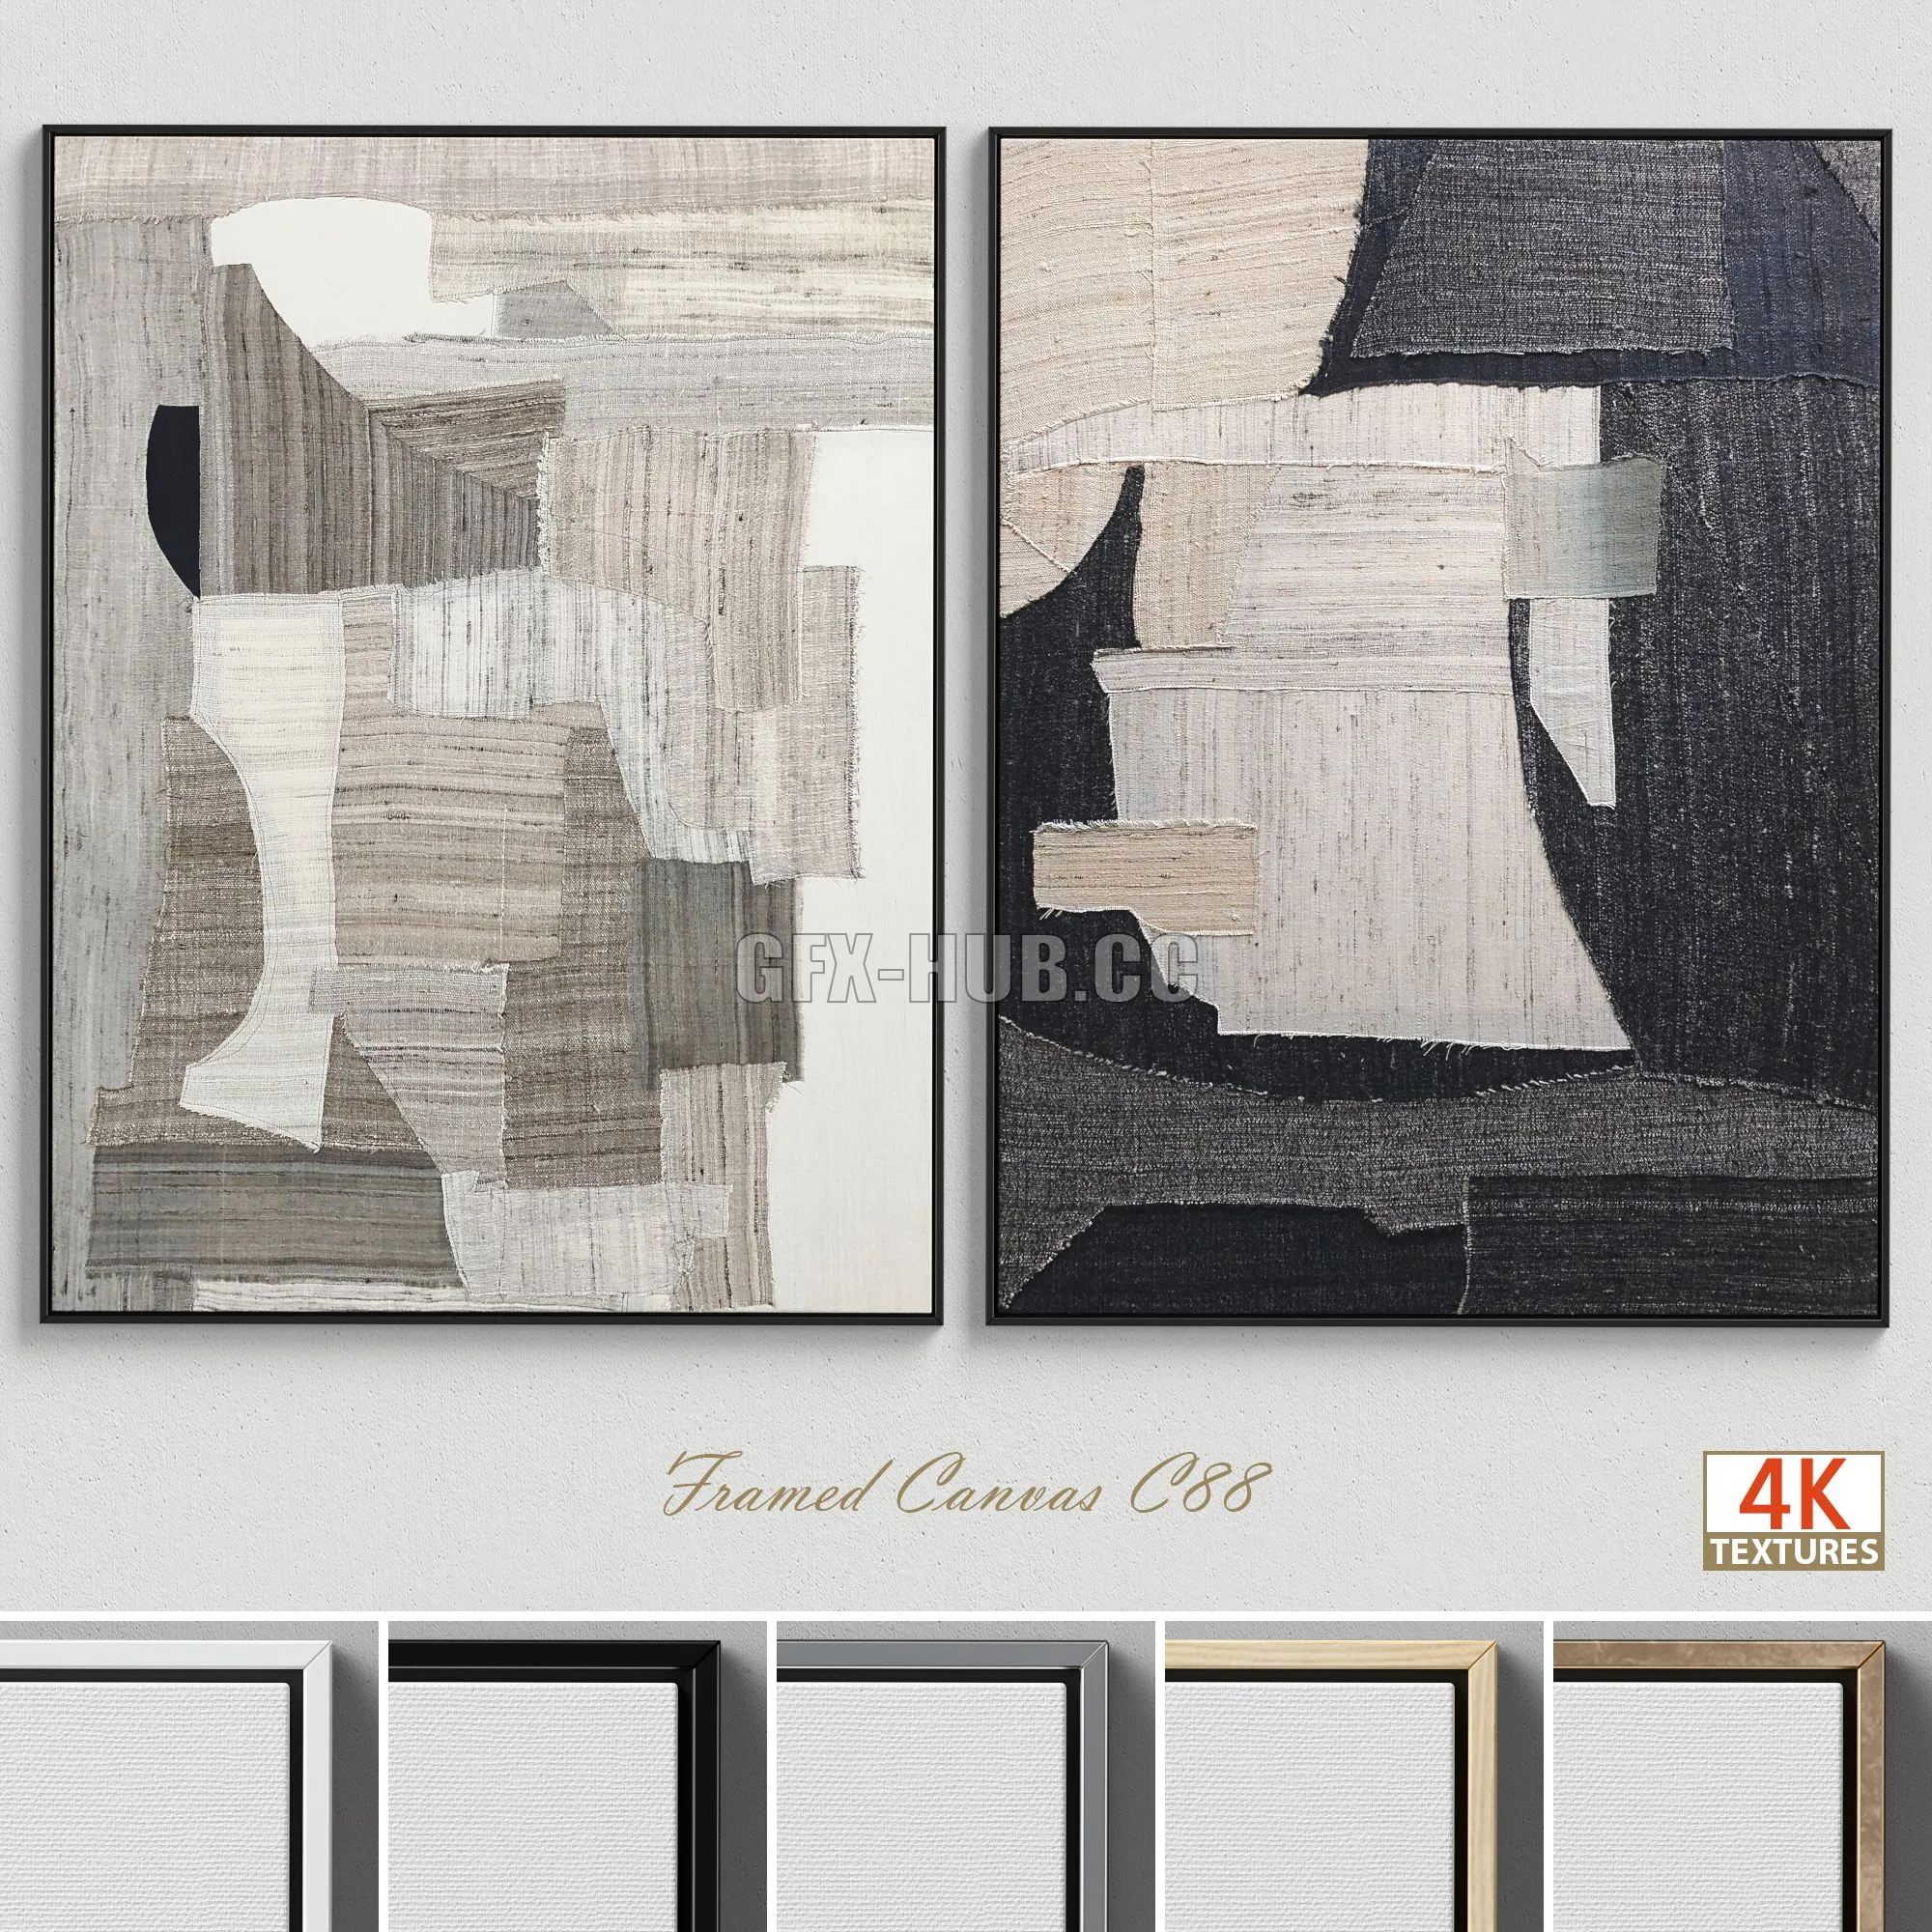 FURNITURE 3D MODELS – Large Living Room Wall Art C 88